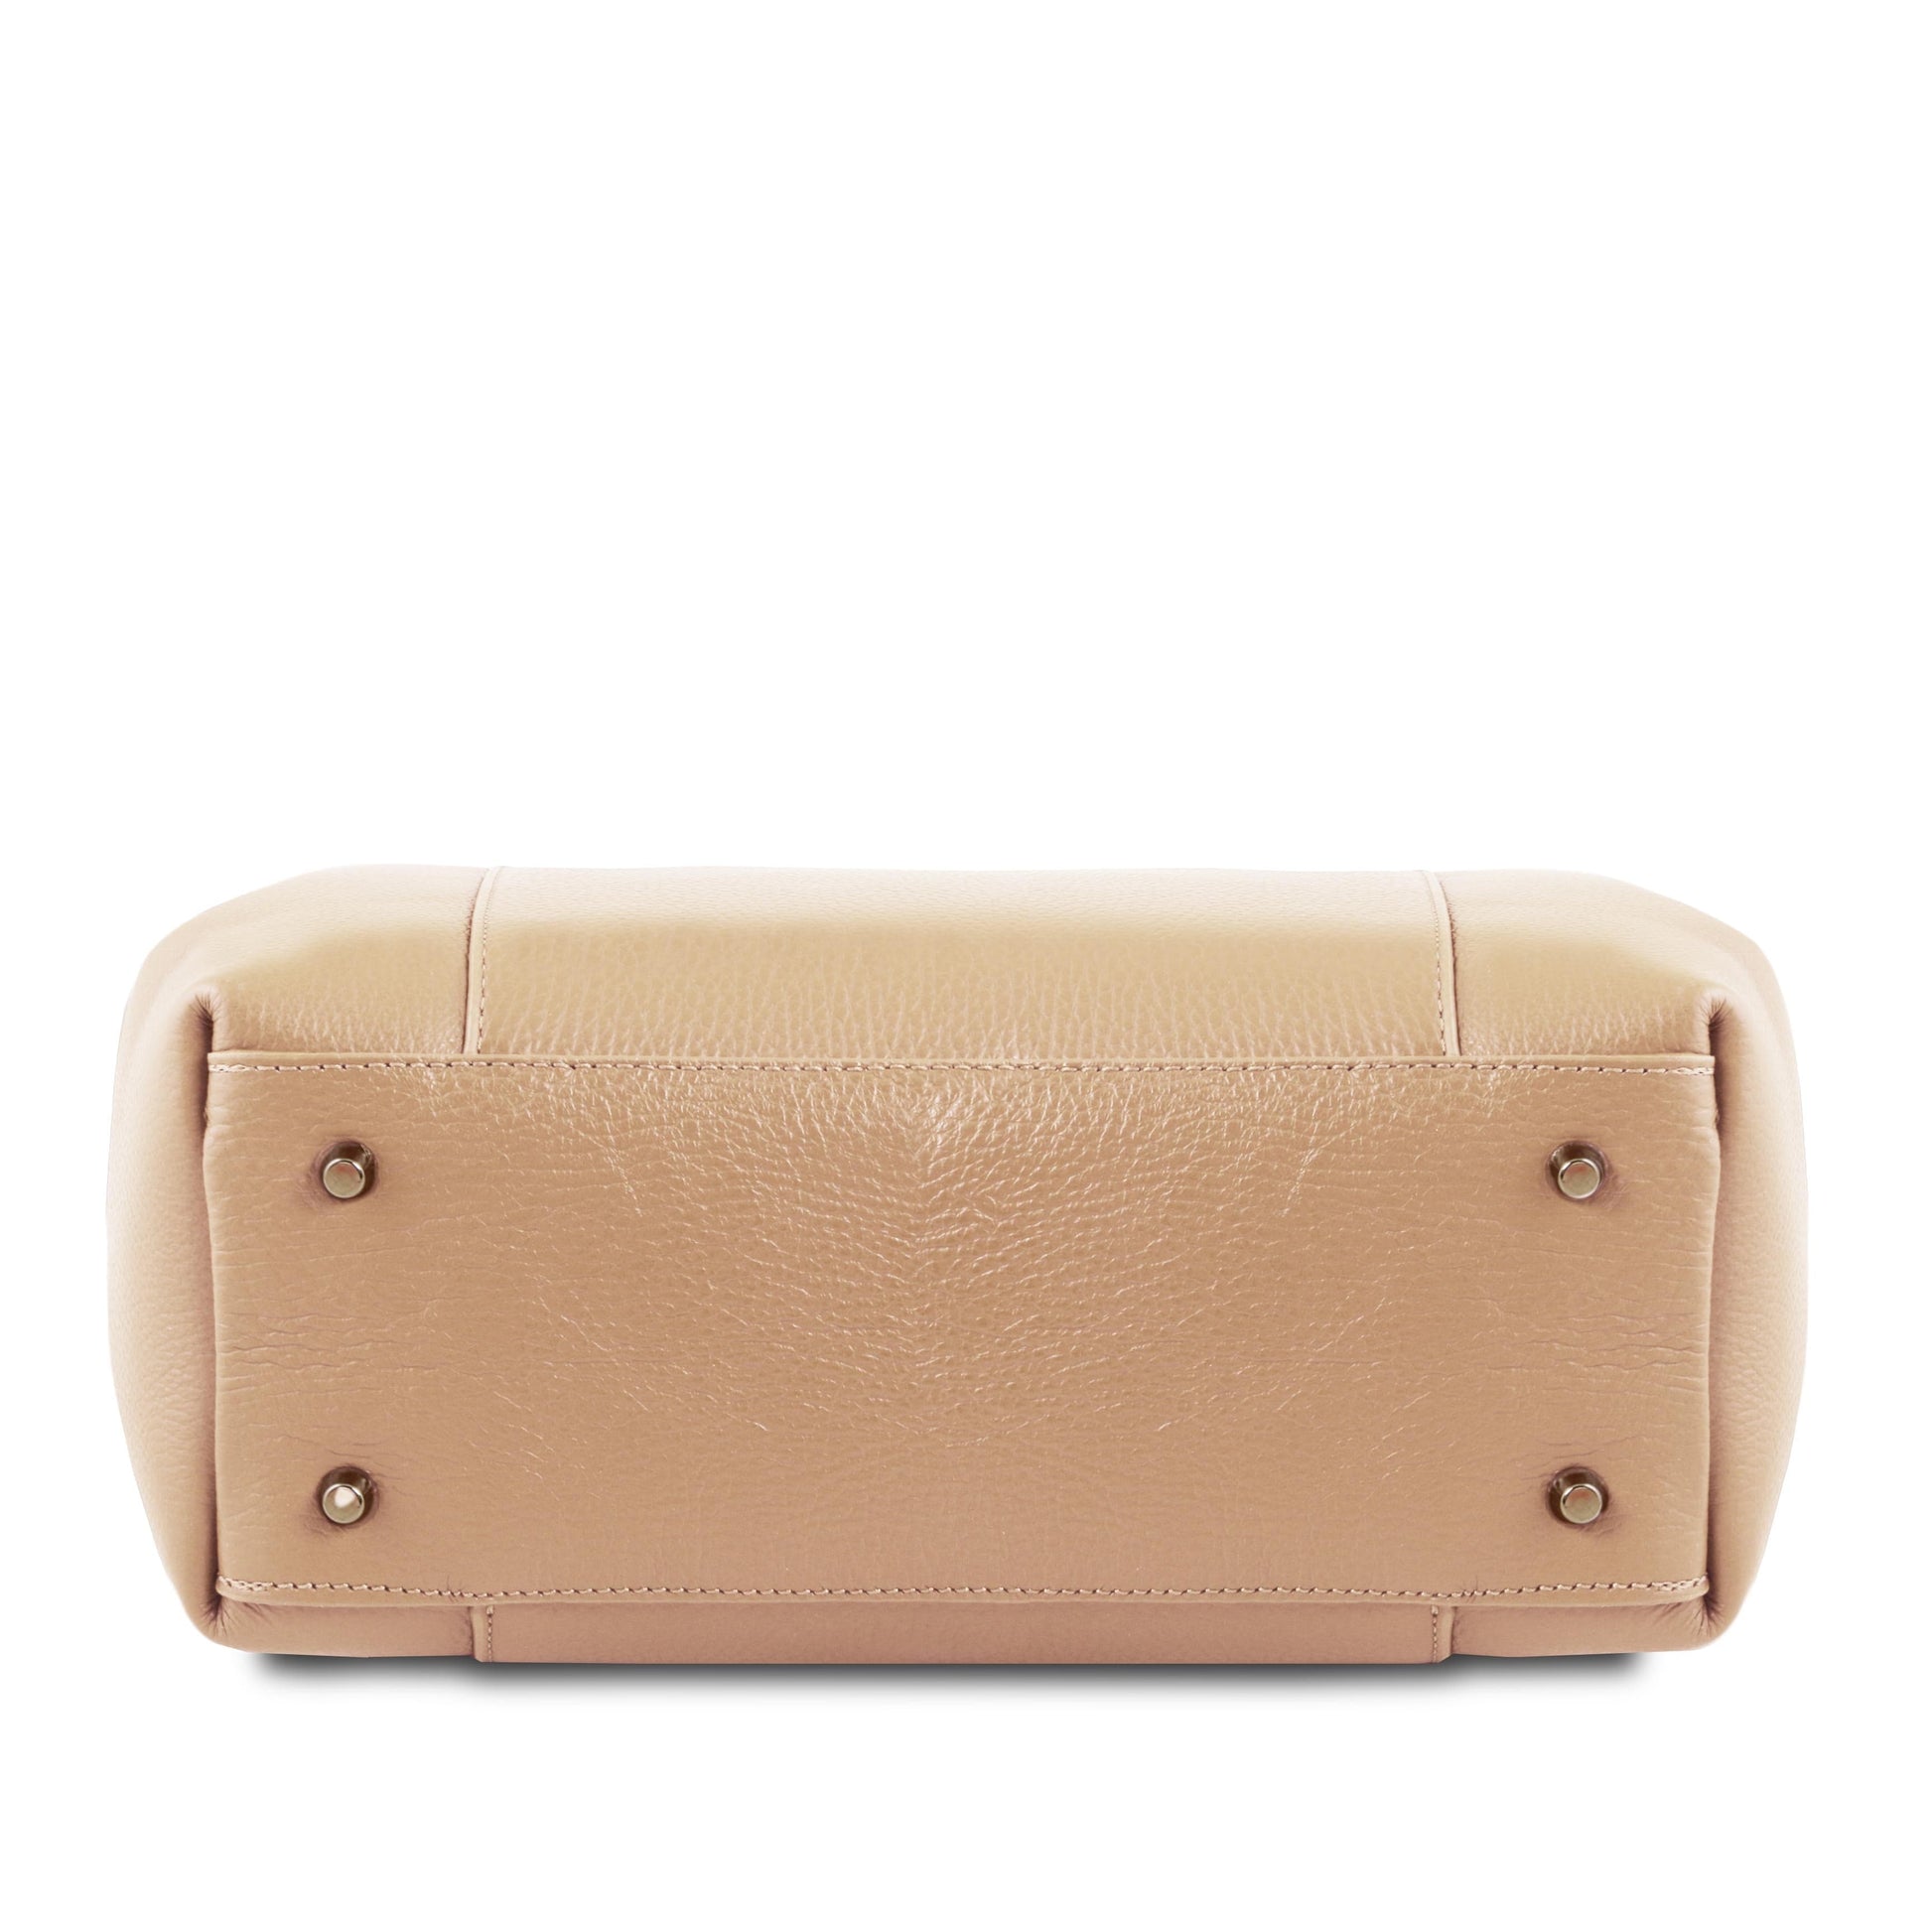 Tulipan - Leather handbag | TL141727 - Premium Leather handbags - Just €152.50! Shop now at San Rocco Italia